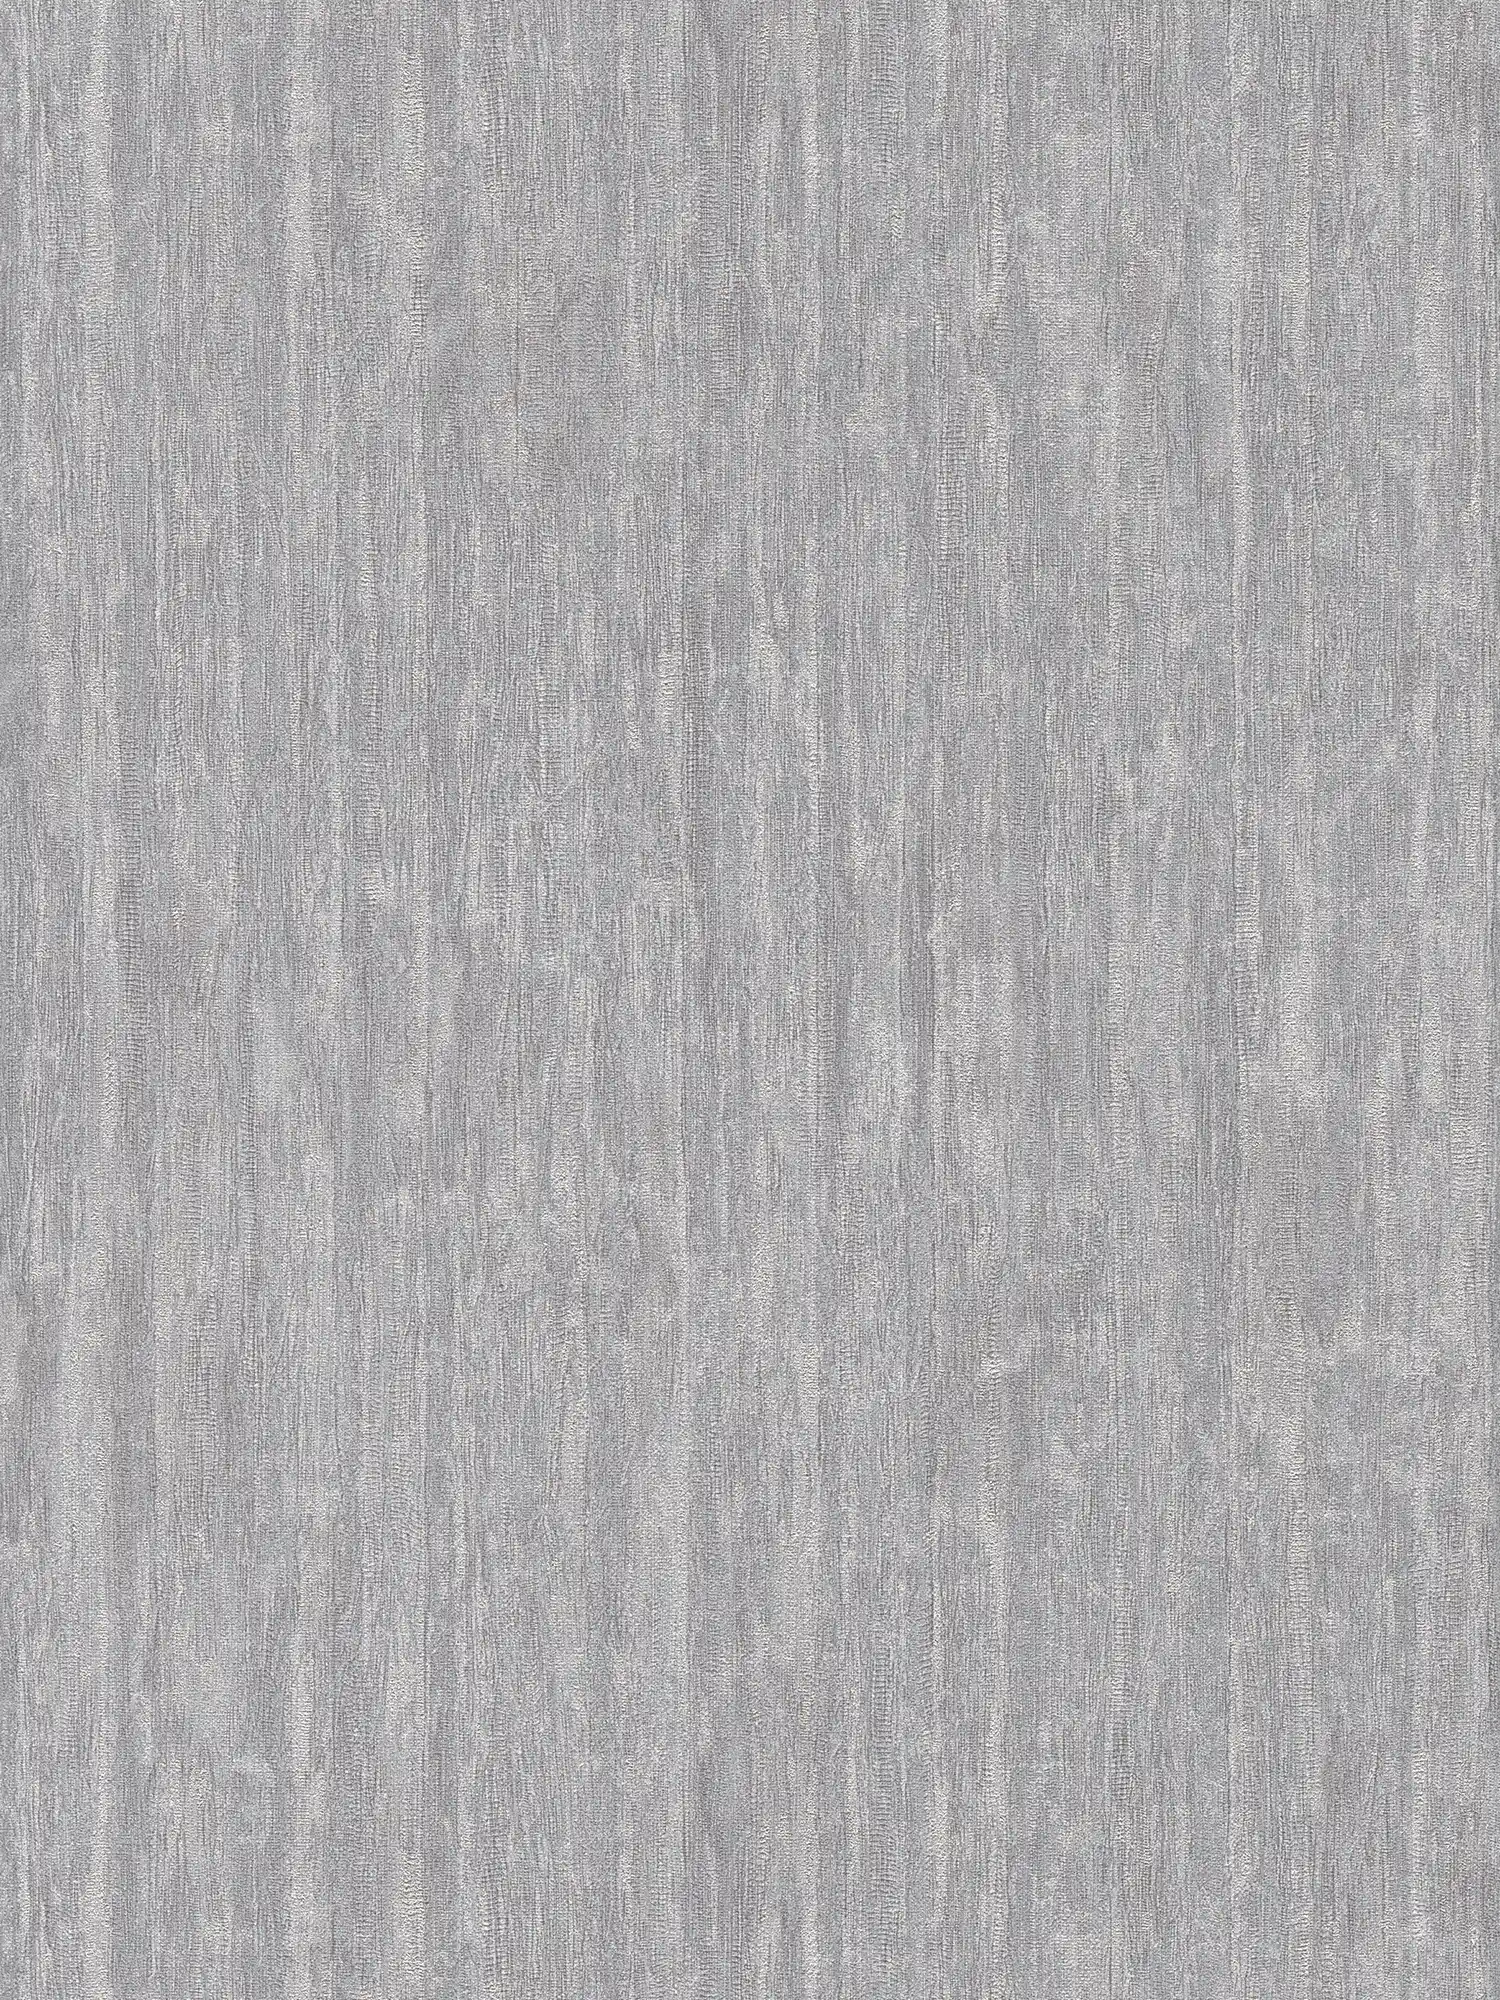 Slightly glossy wallpaper with line pattern - grey, silver, metallic
